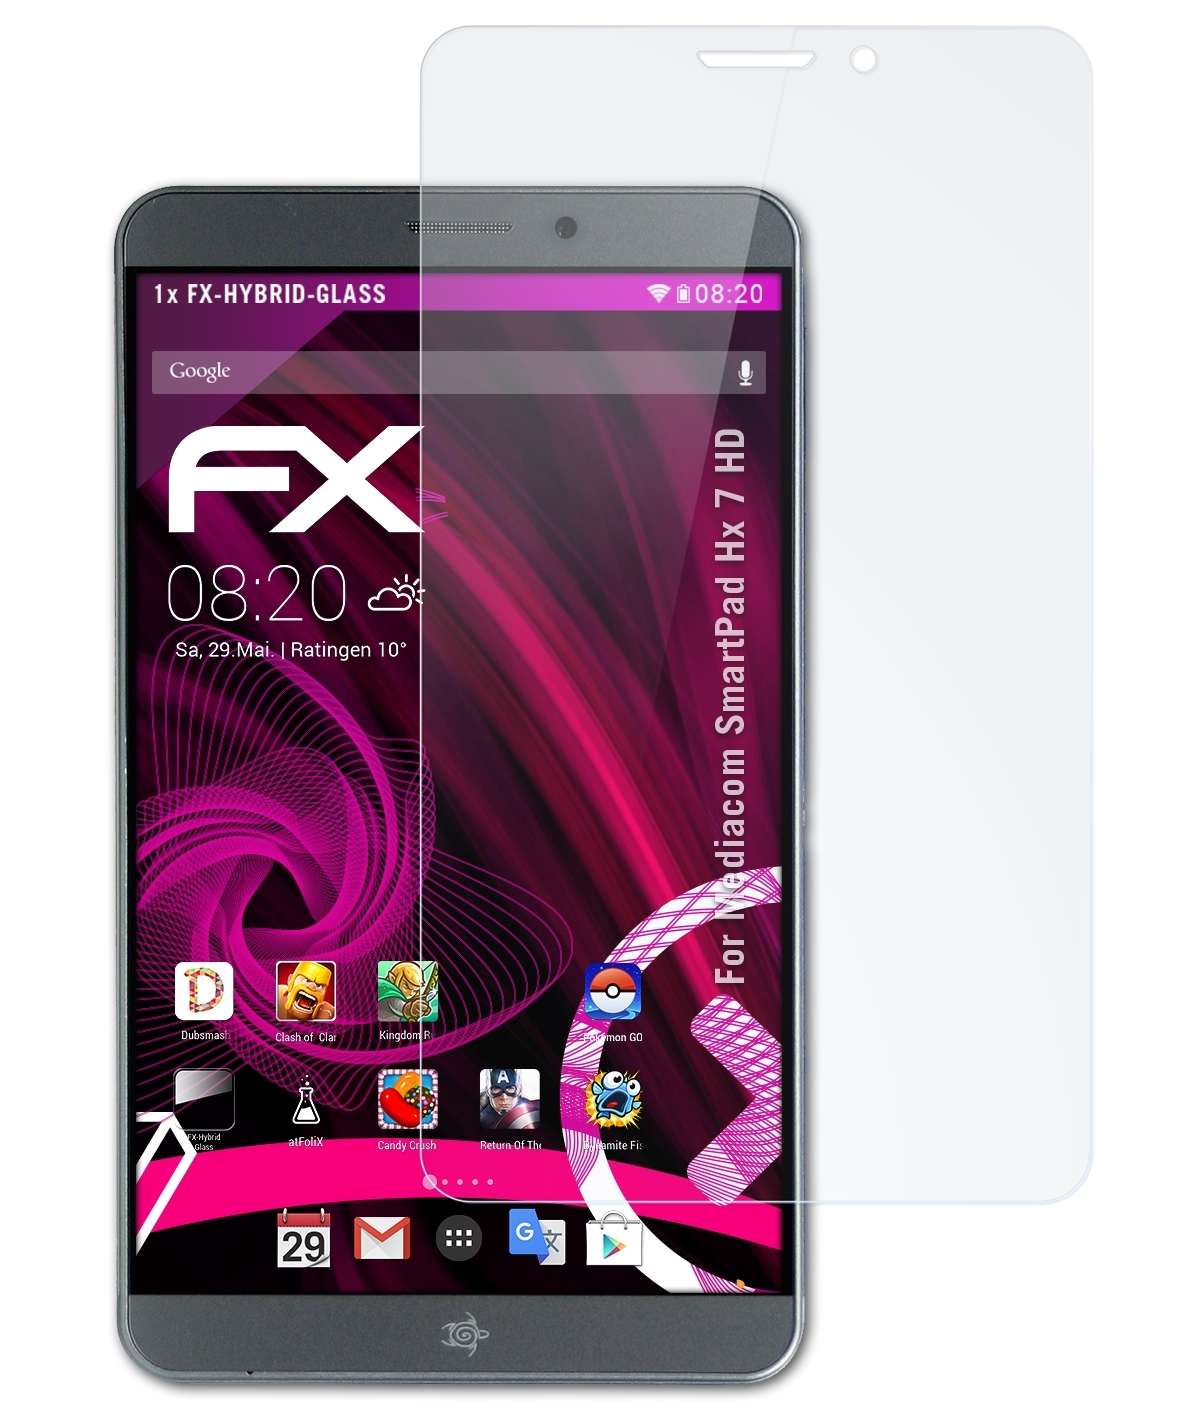 ATFOLIX FX-Hybrid-Glass SmartPad Hx HD) Mediacom Schutzglas(für 7